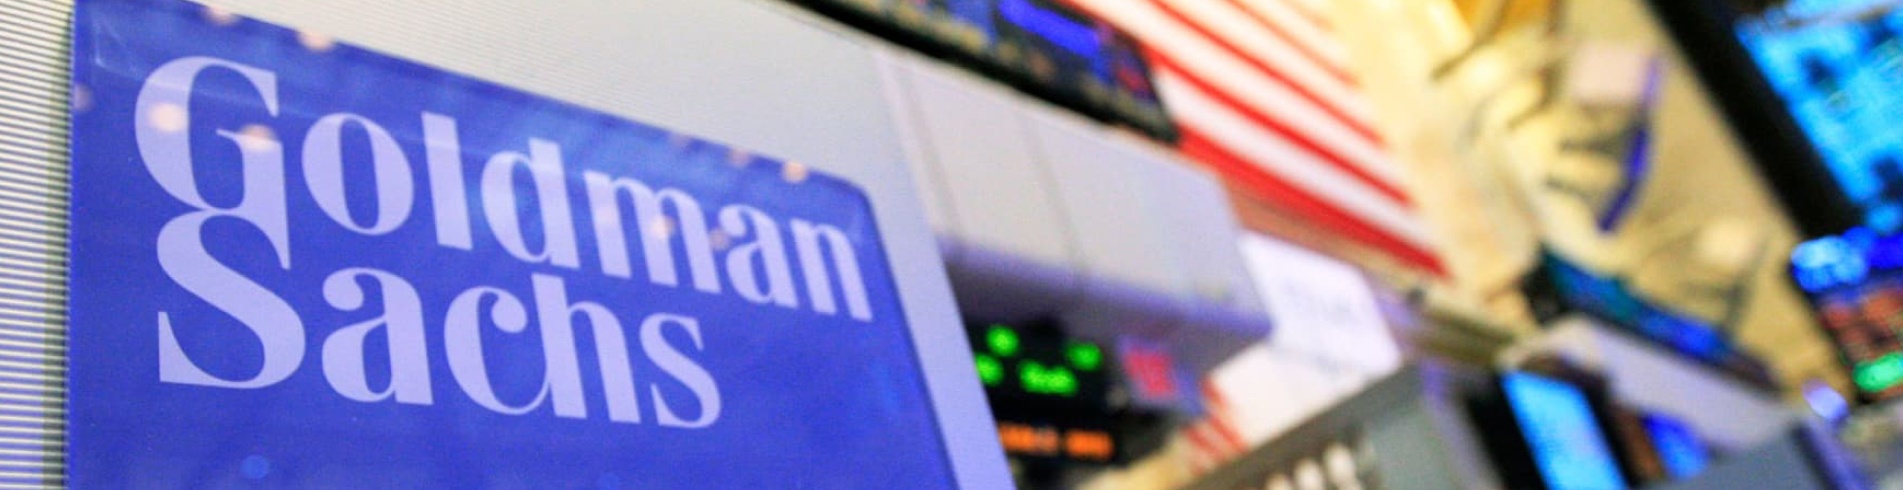 Asian Stocks Included In Goldman’s List